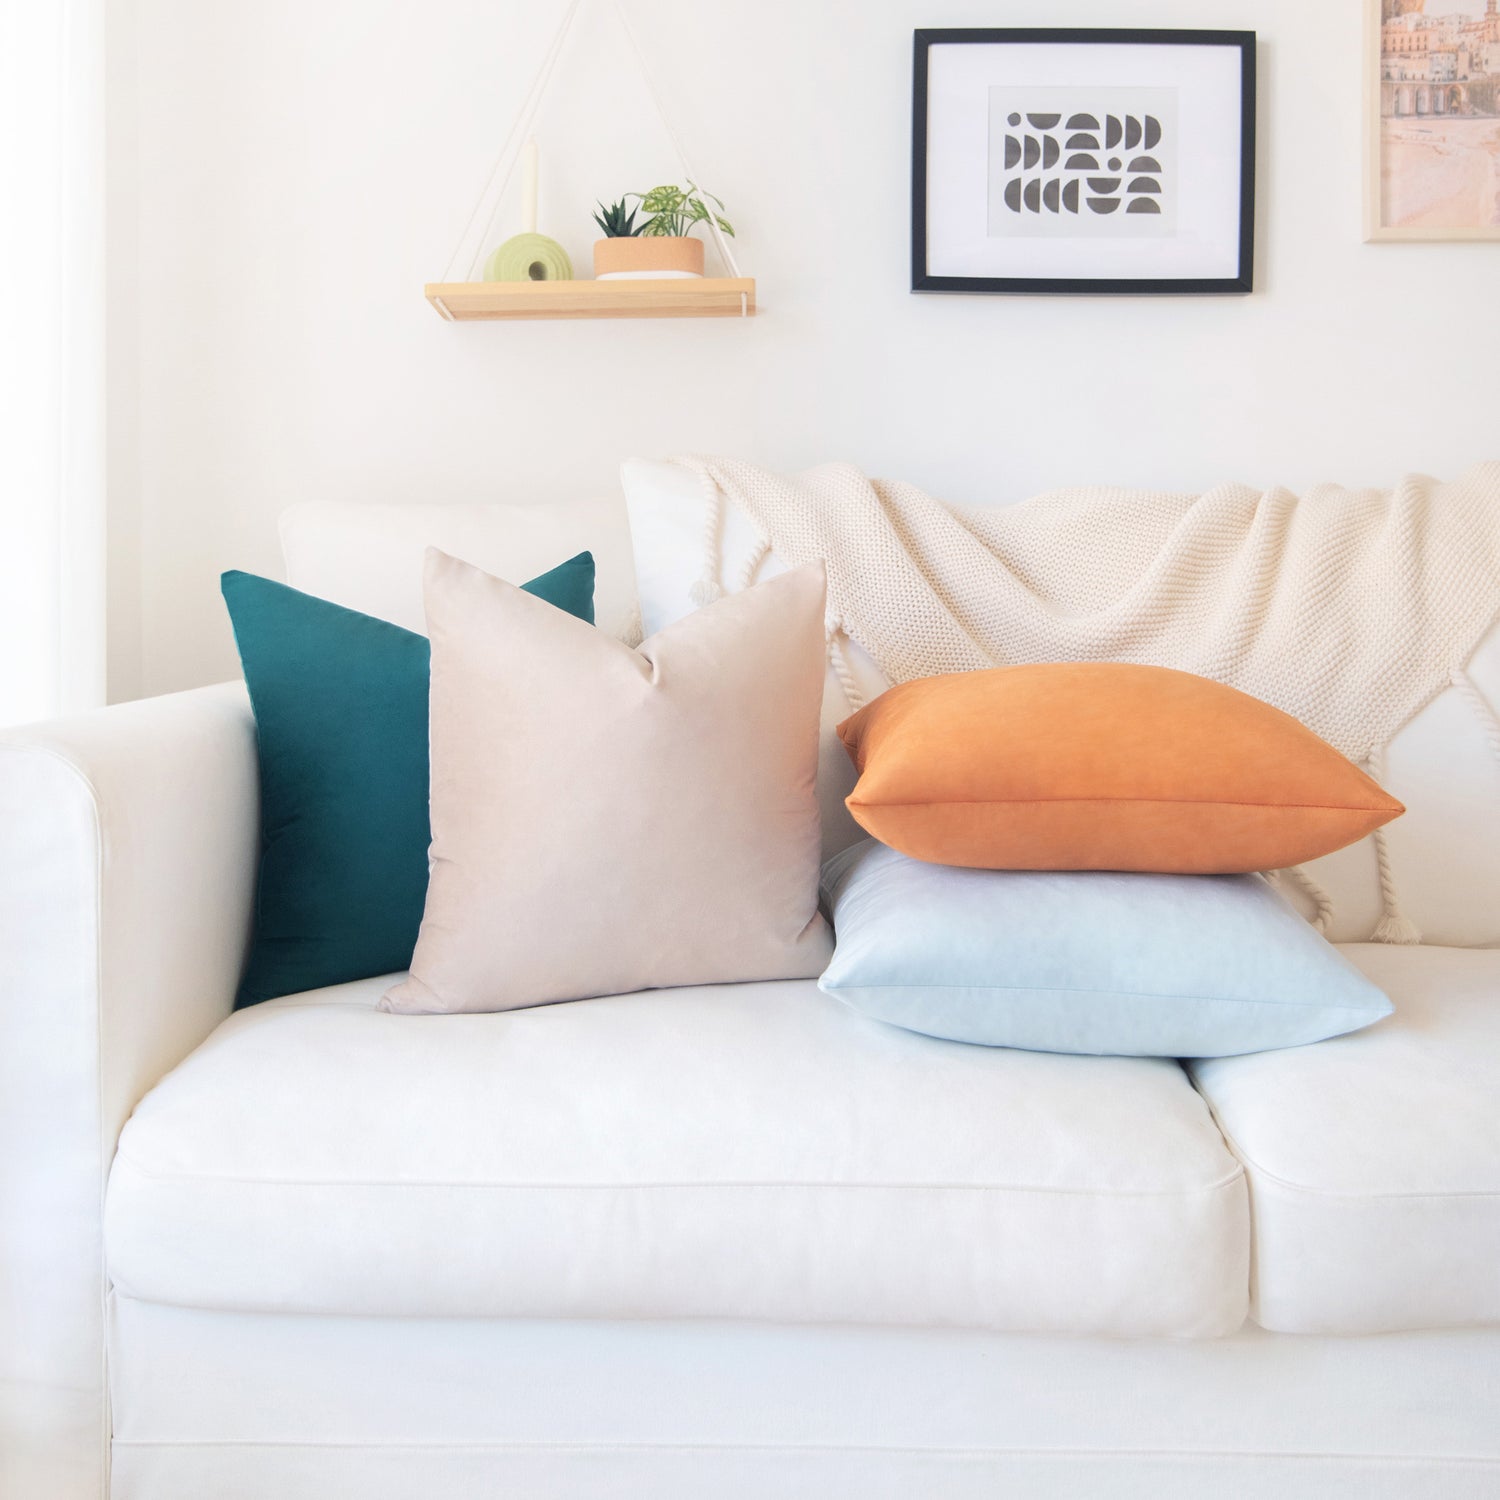 decorative throw pillow covers velvet home decor set of 4 green beige orange blue